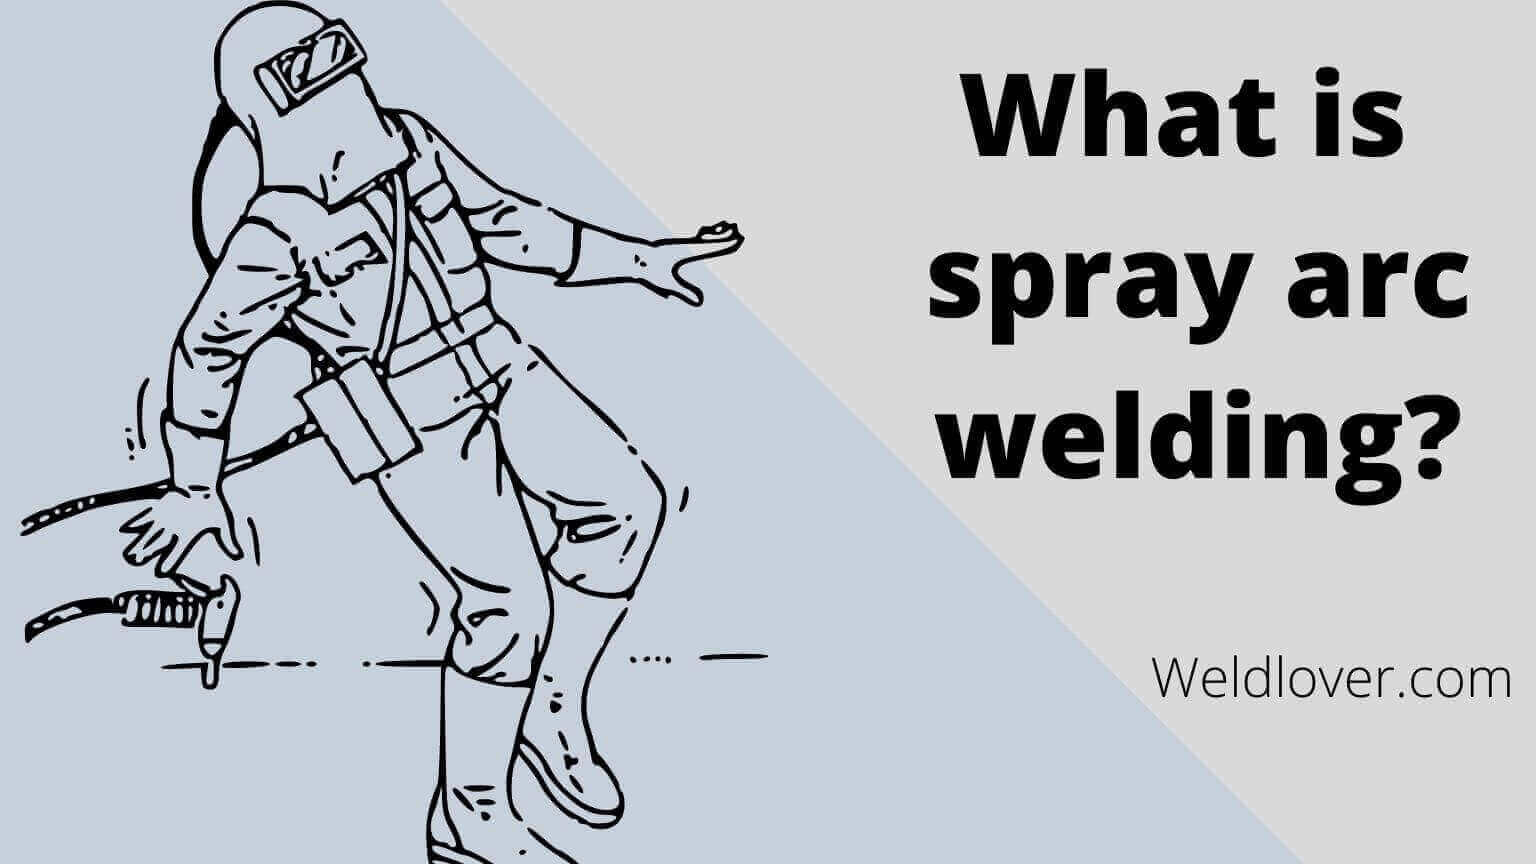 What is spray arc welding